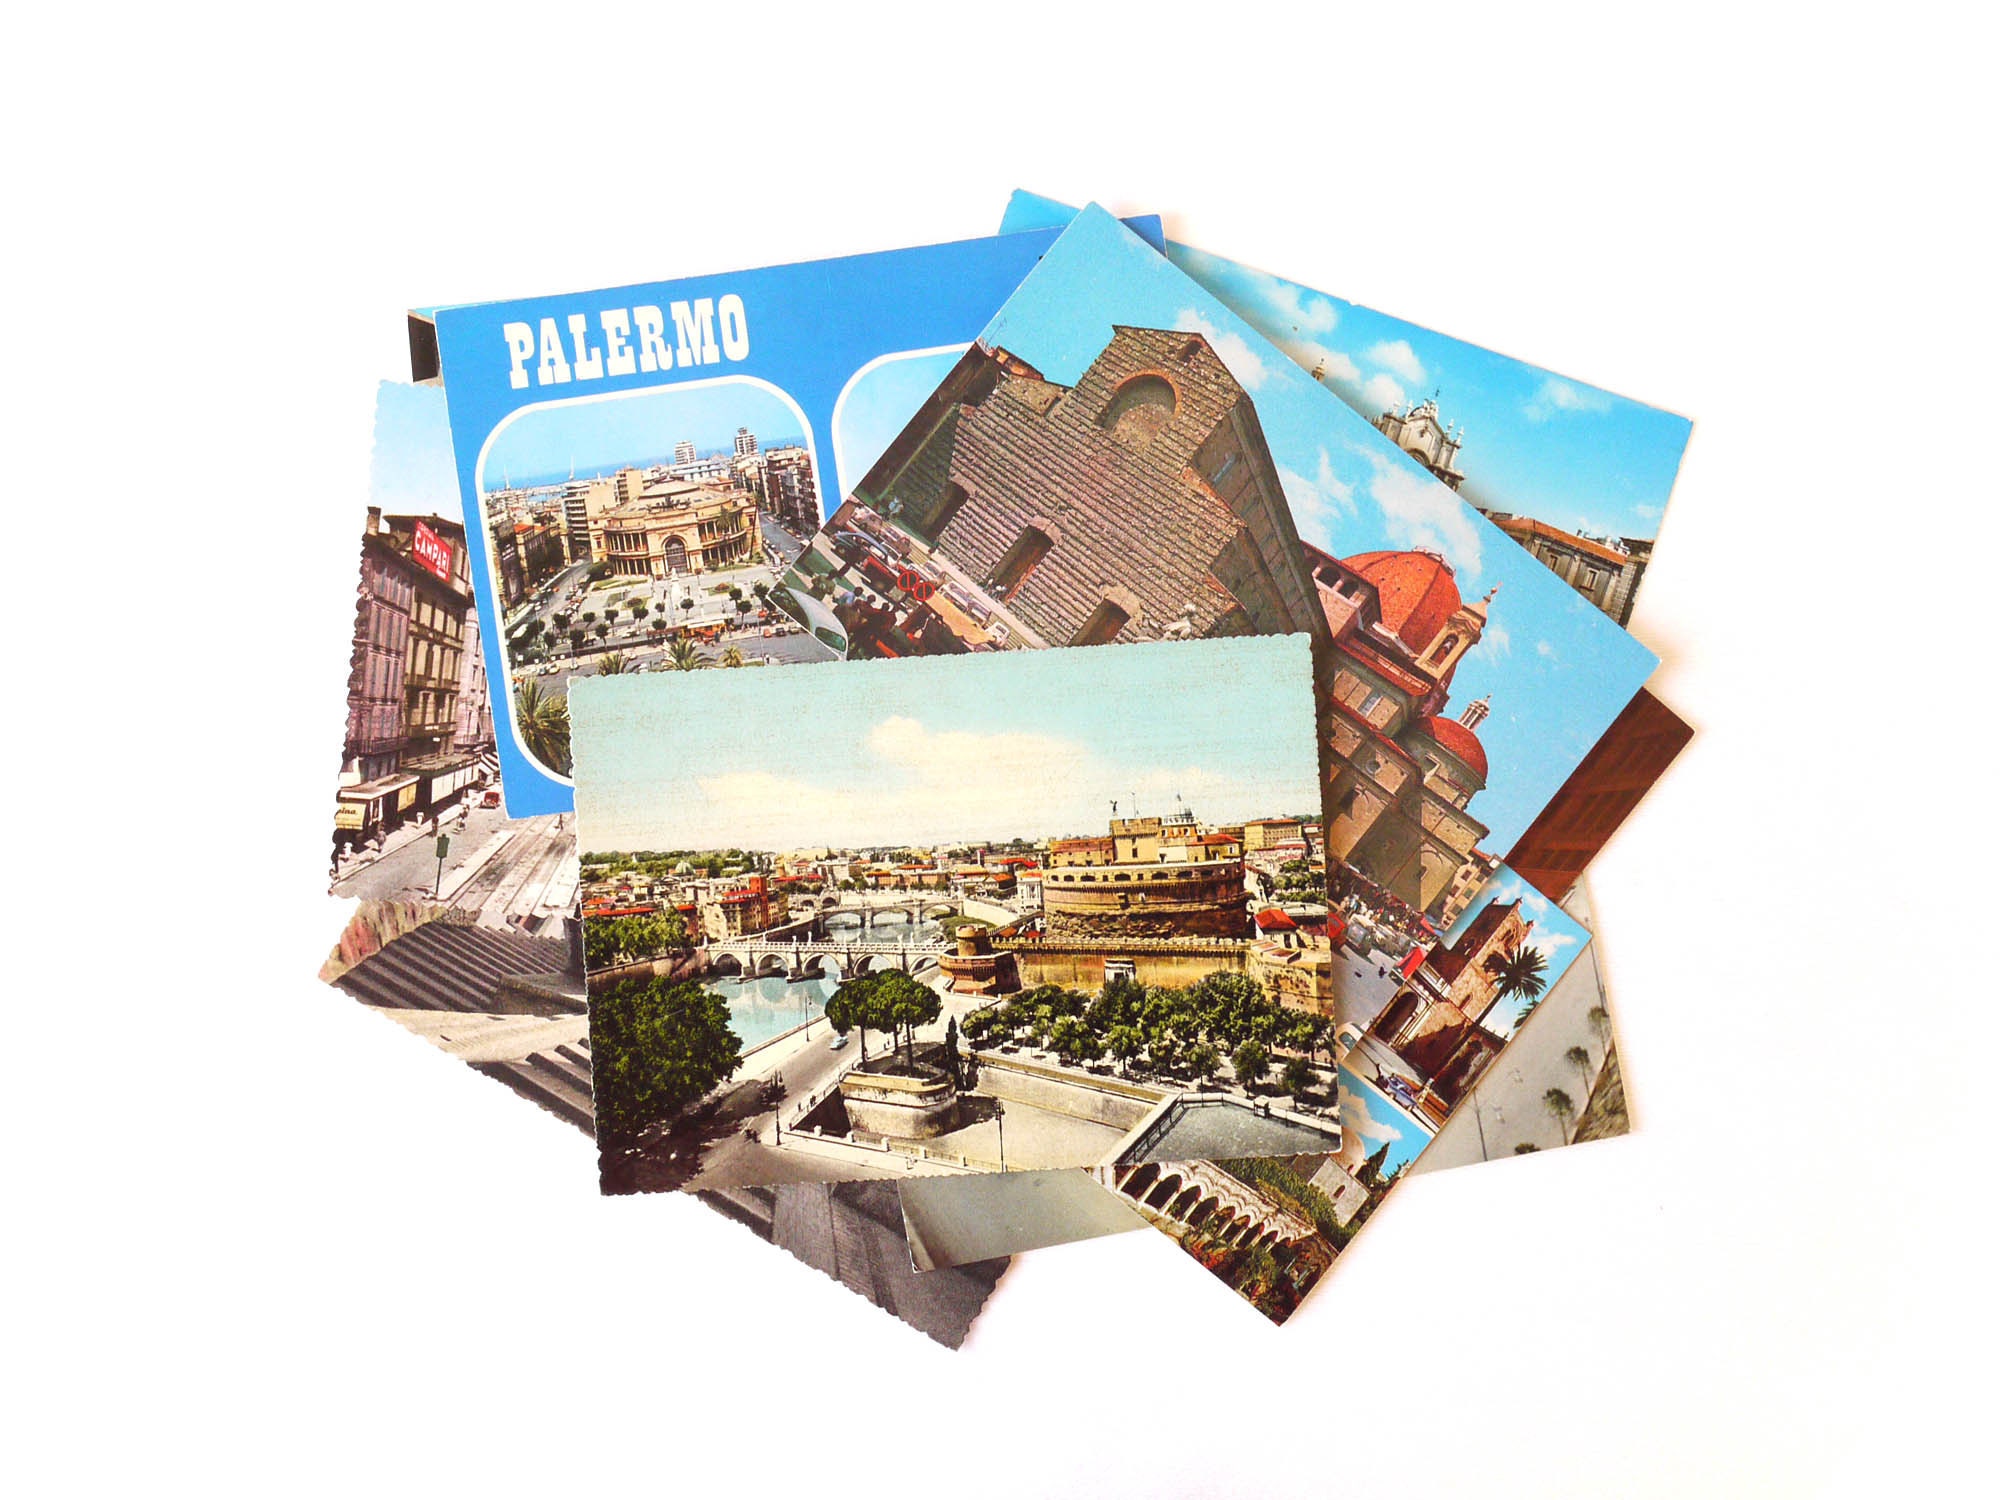 Set of 12 Fine Art Postcards of Italian Scenes From Original Oil Paintings  